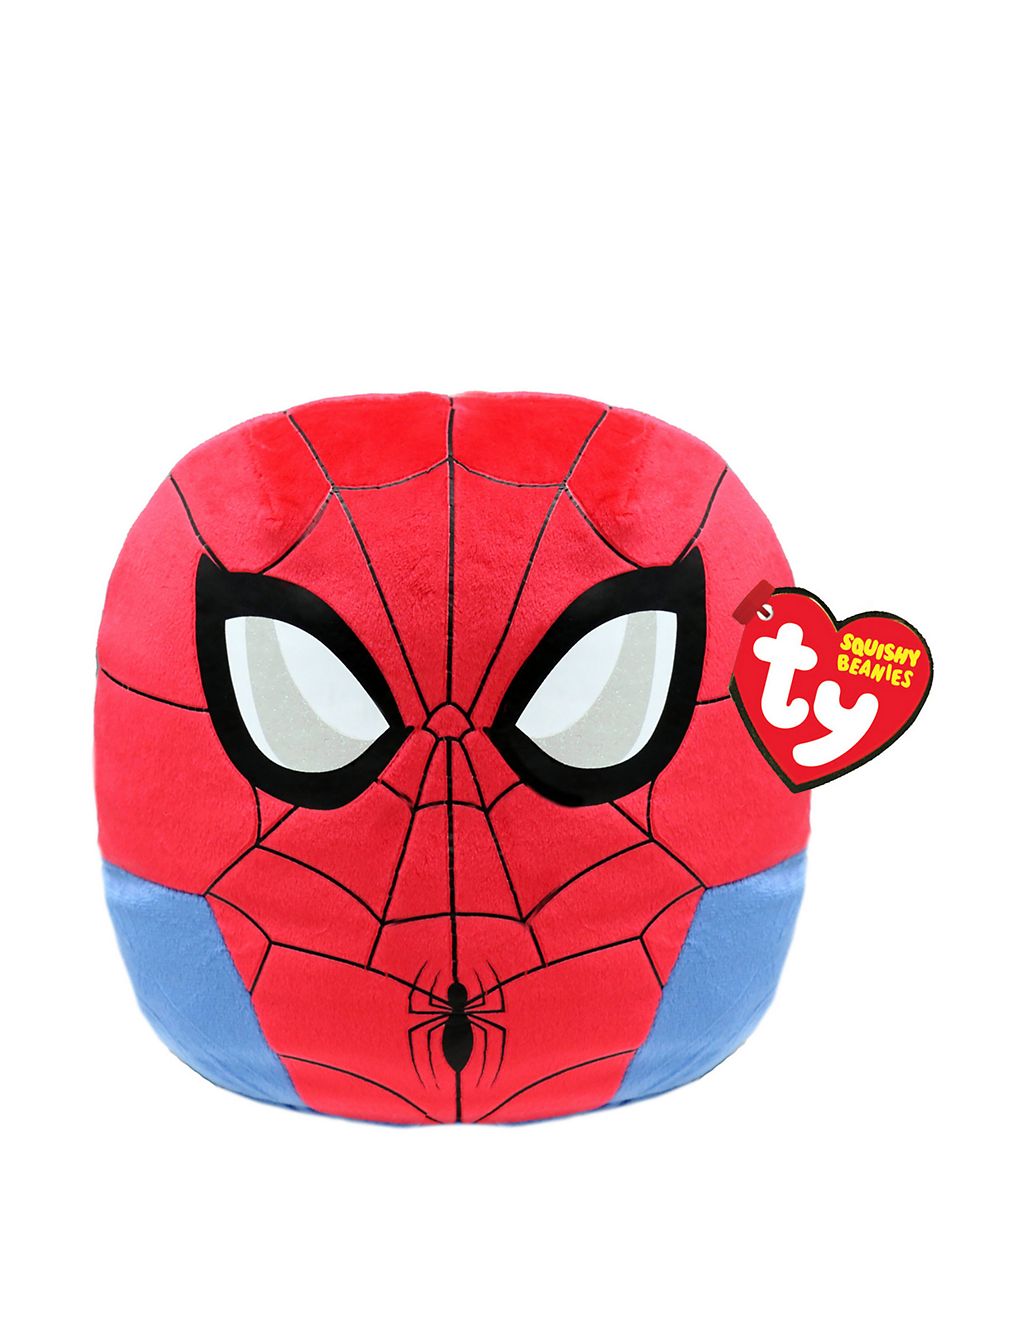 Spider-Man™ Squishy Beanie Toy (4-7 Years) 1 of 1